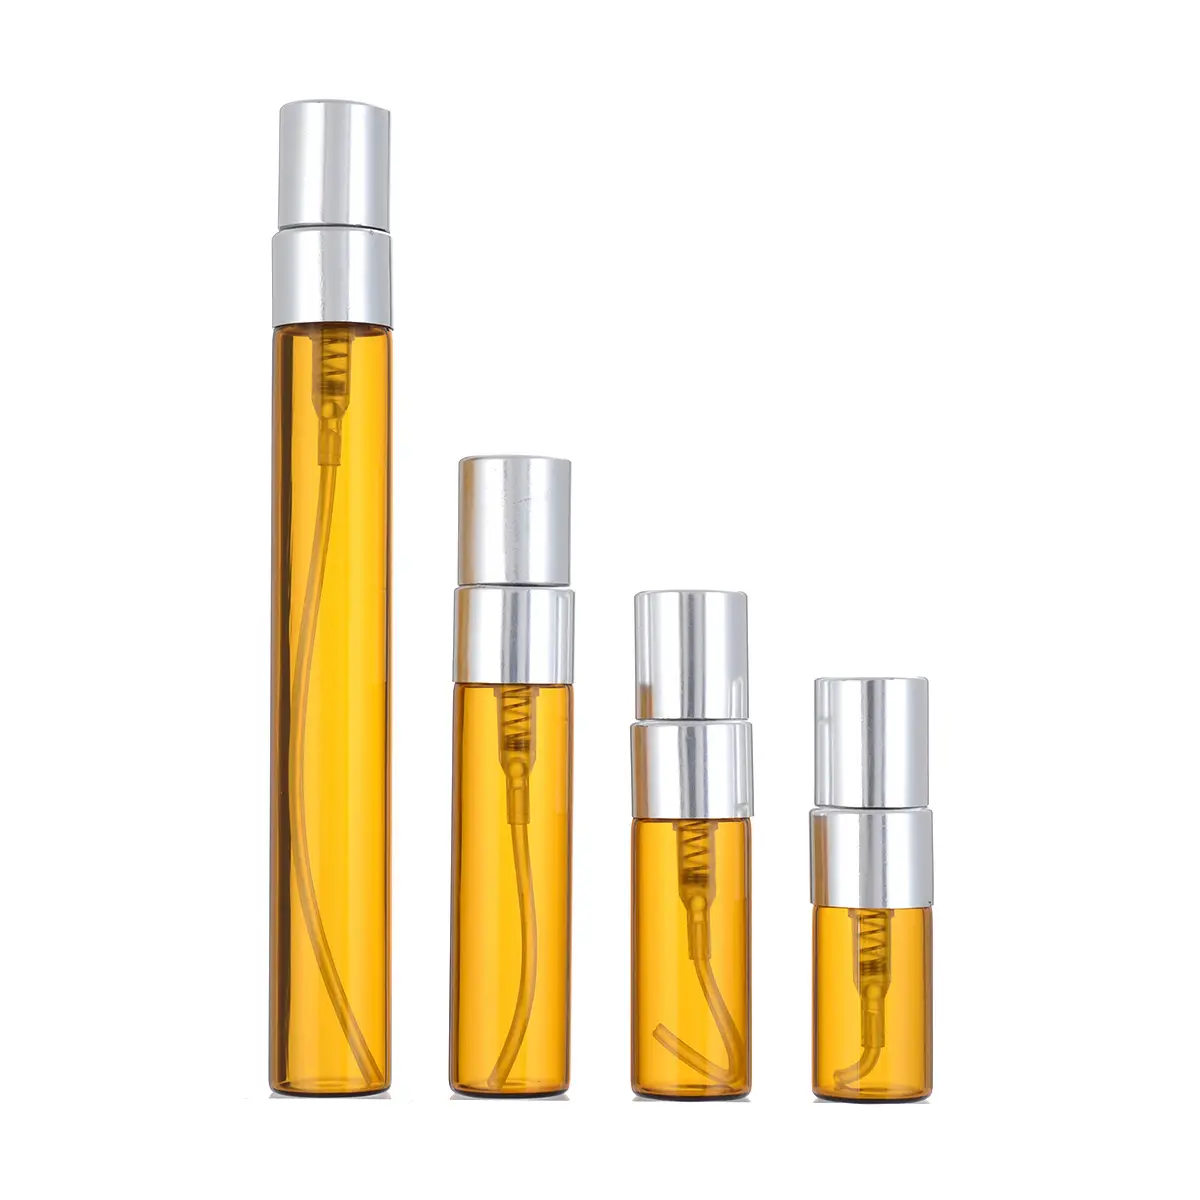 1 ml 2 ml 3 ml 5 ml 10 ml mini size refillable sample perfume oil test aluminum pump sprayer atomizer tester bottle